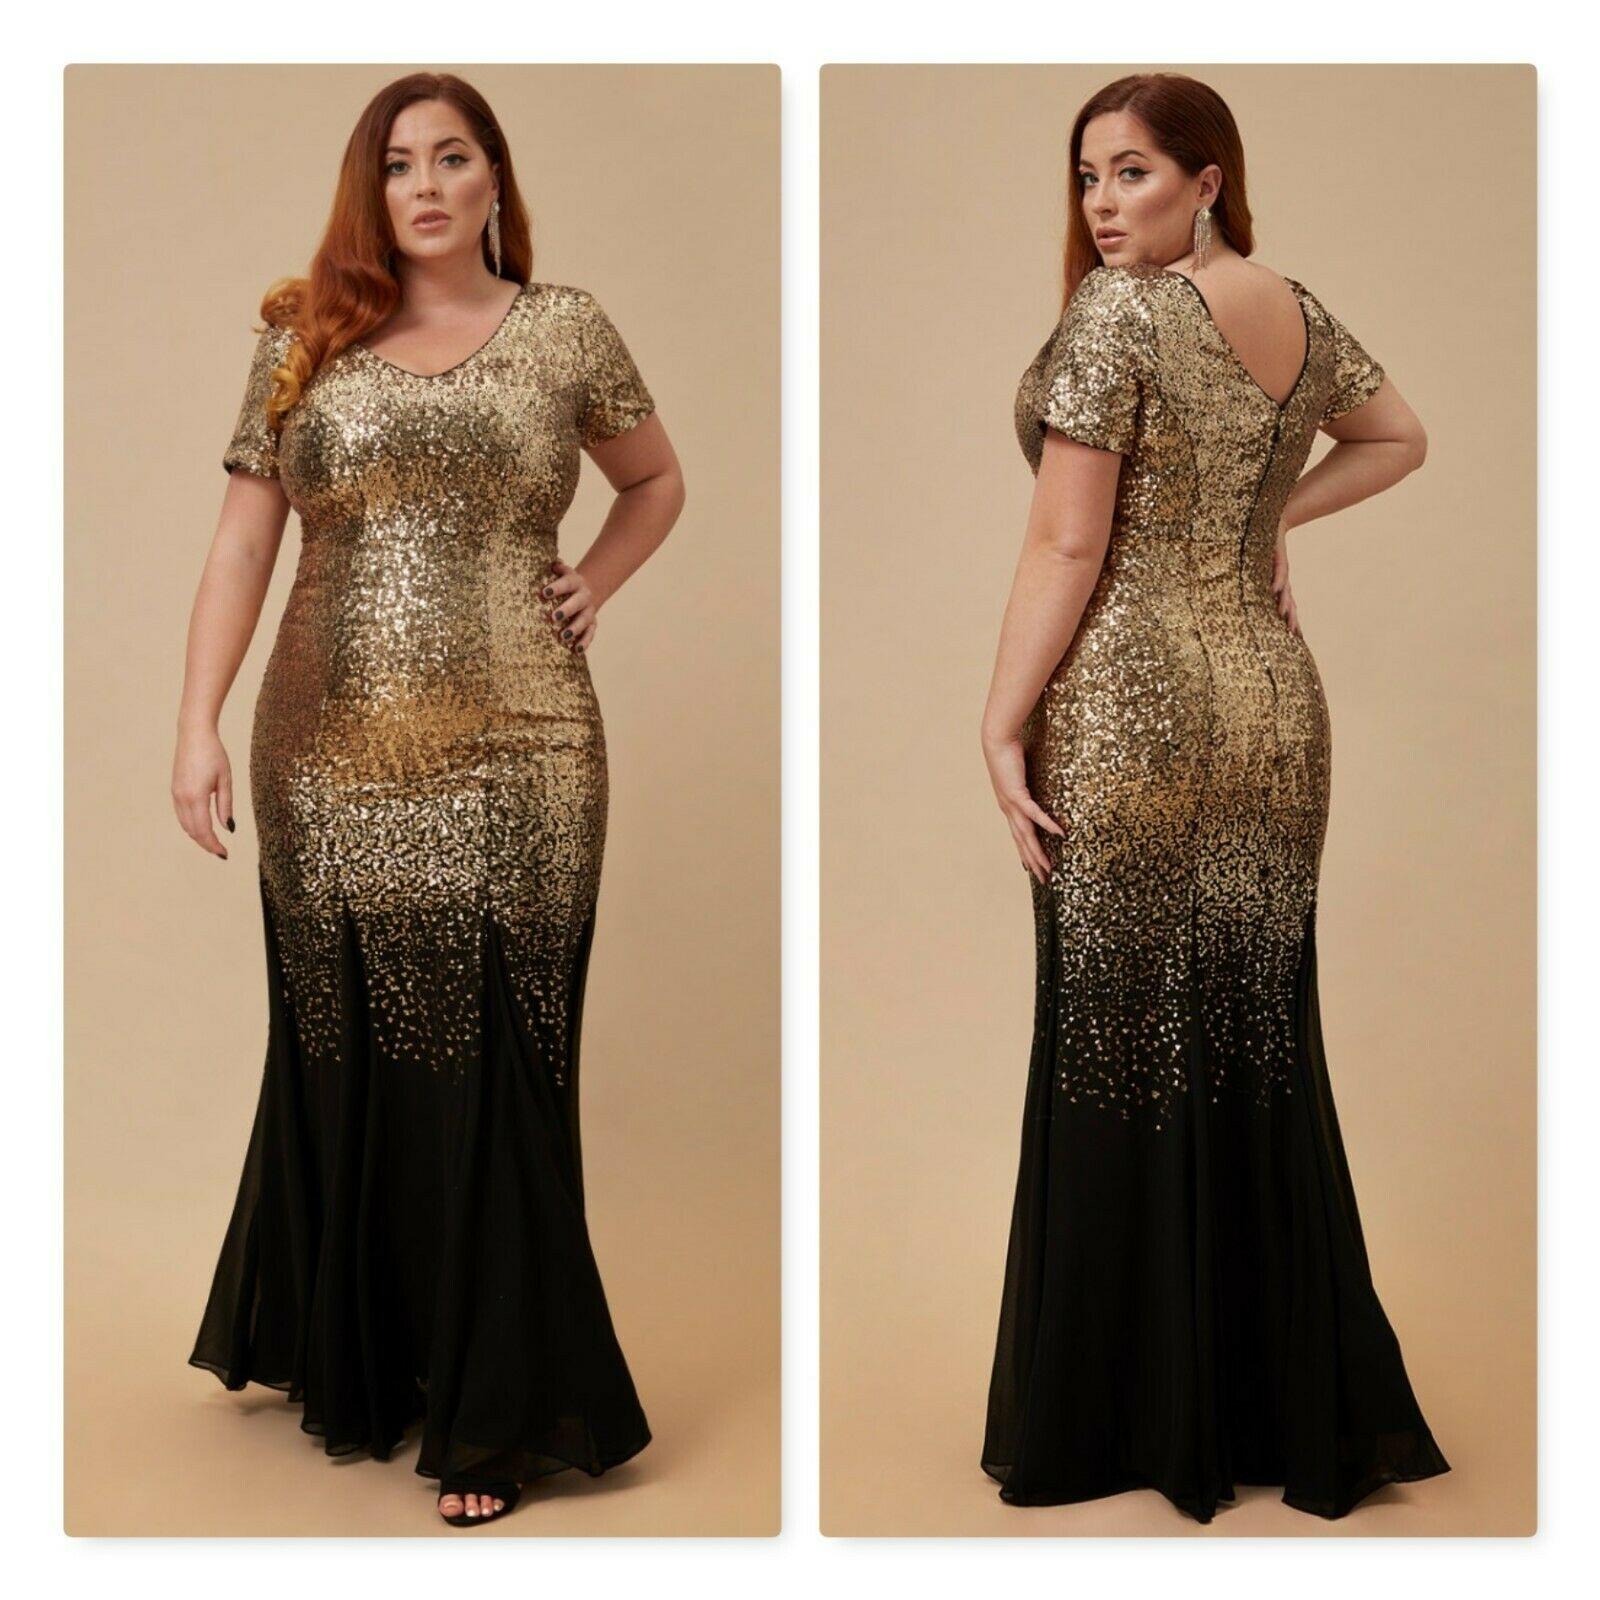 goddiva sequin embellished plunge maxi dress in black and gold